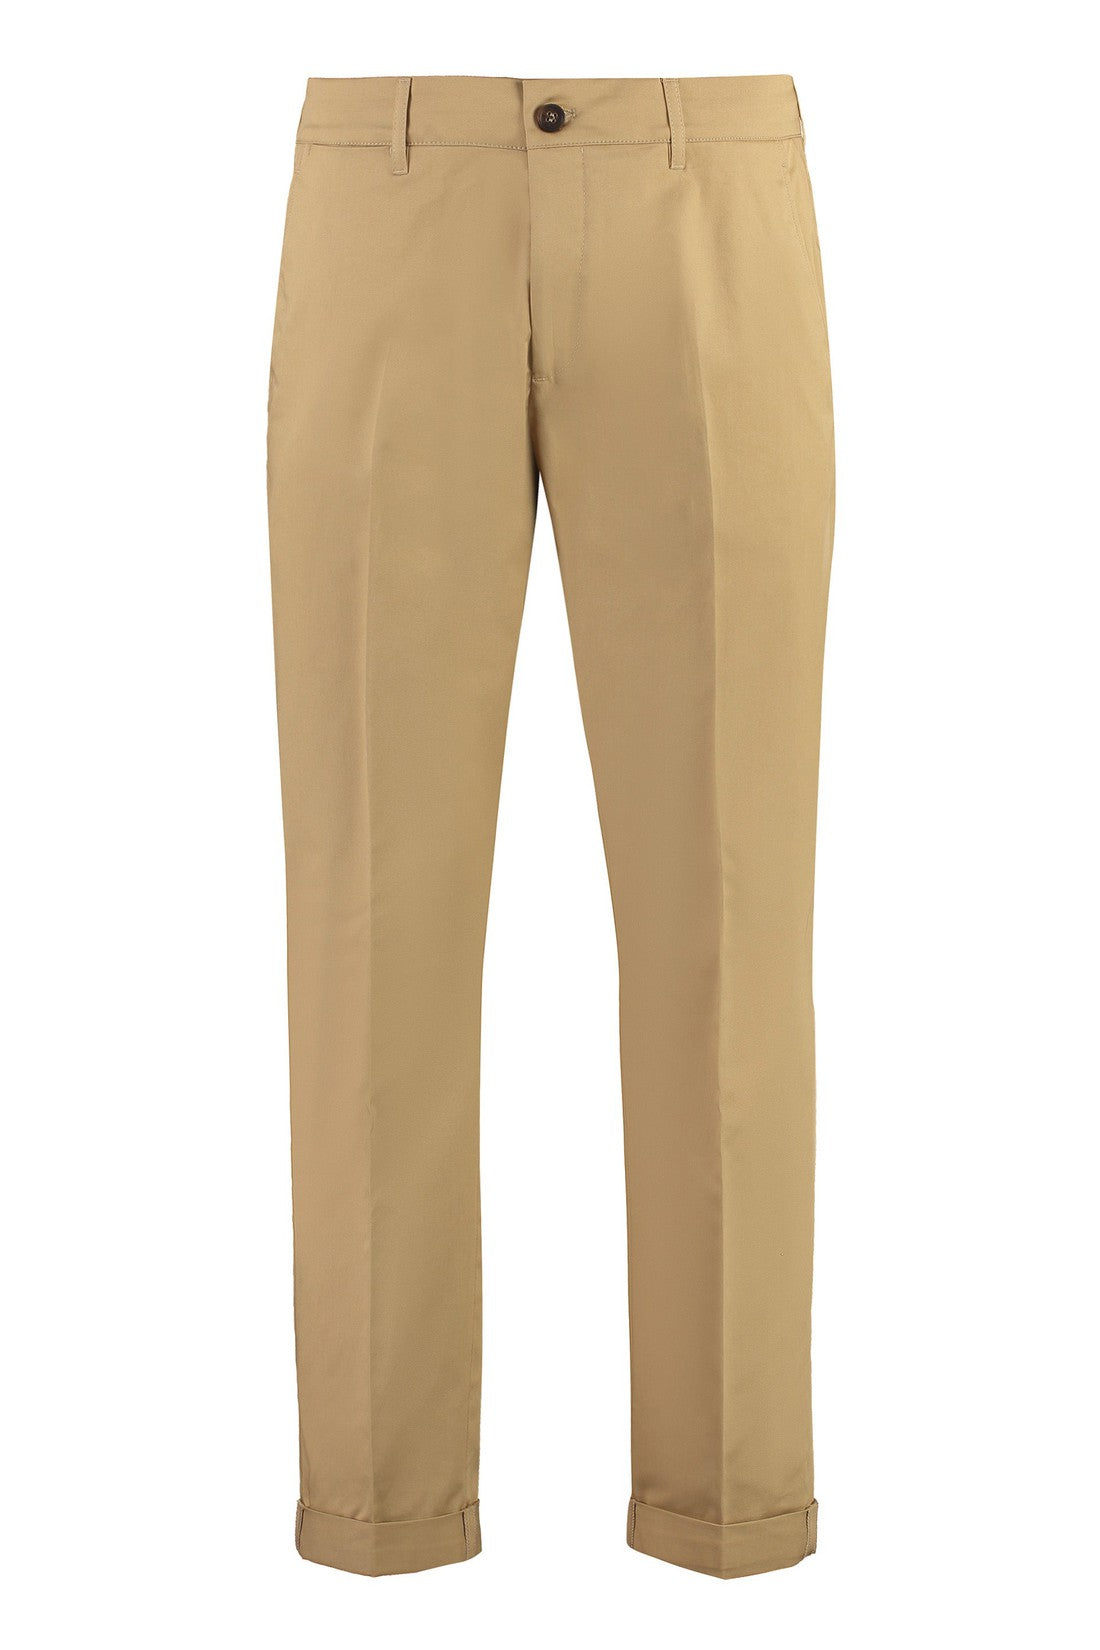 Golden Goose-OUTLET-SALE-Conrad cotton Chino trousers-ARCHIVIST